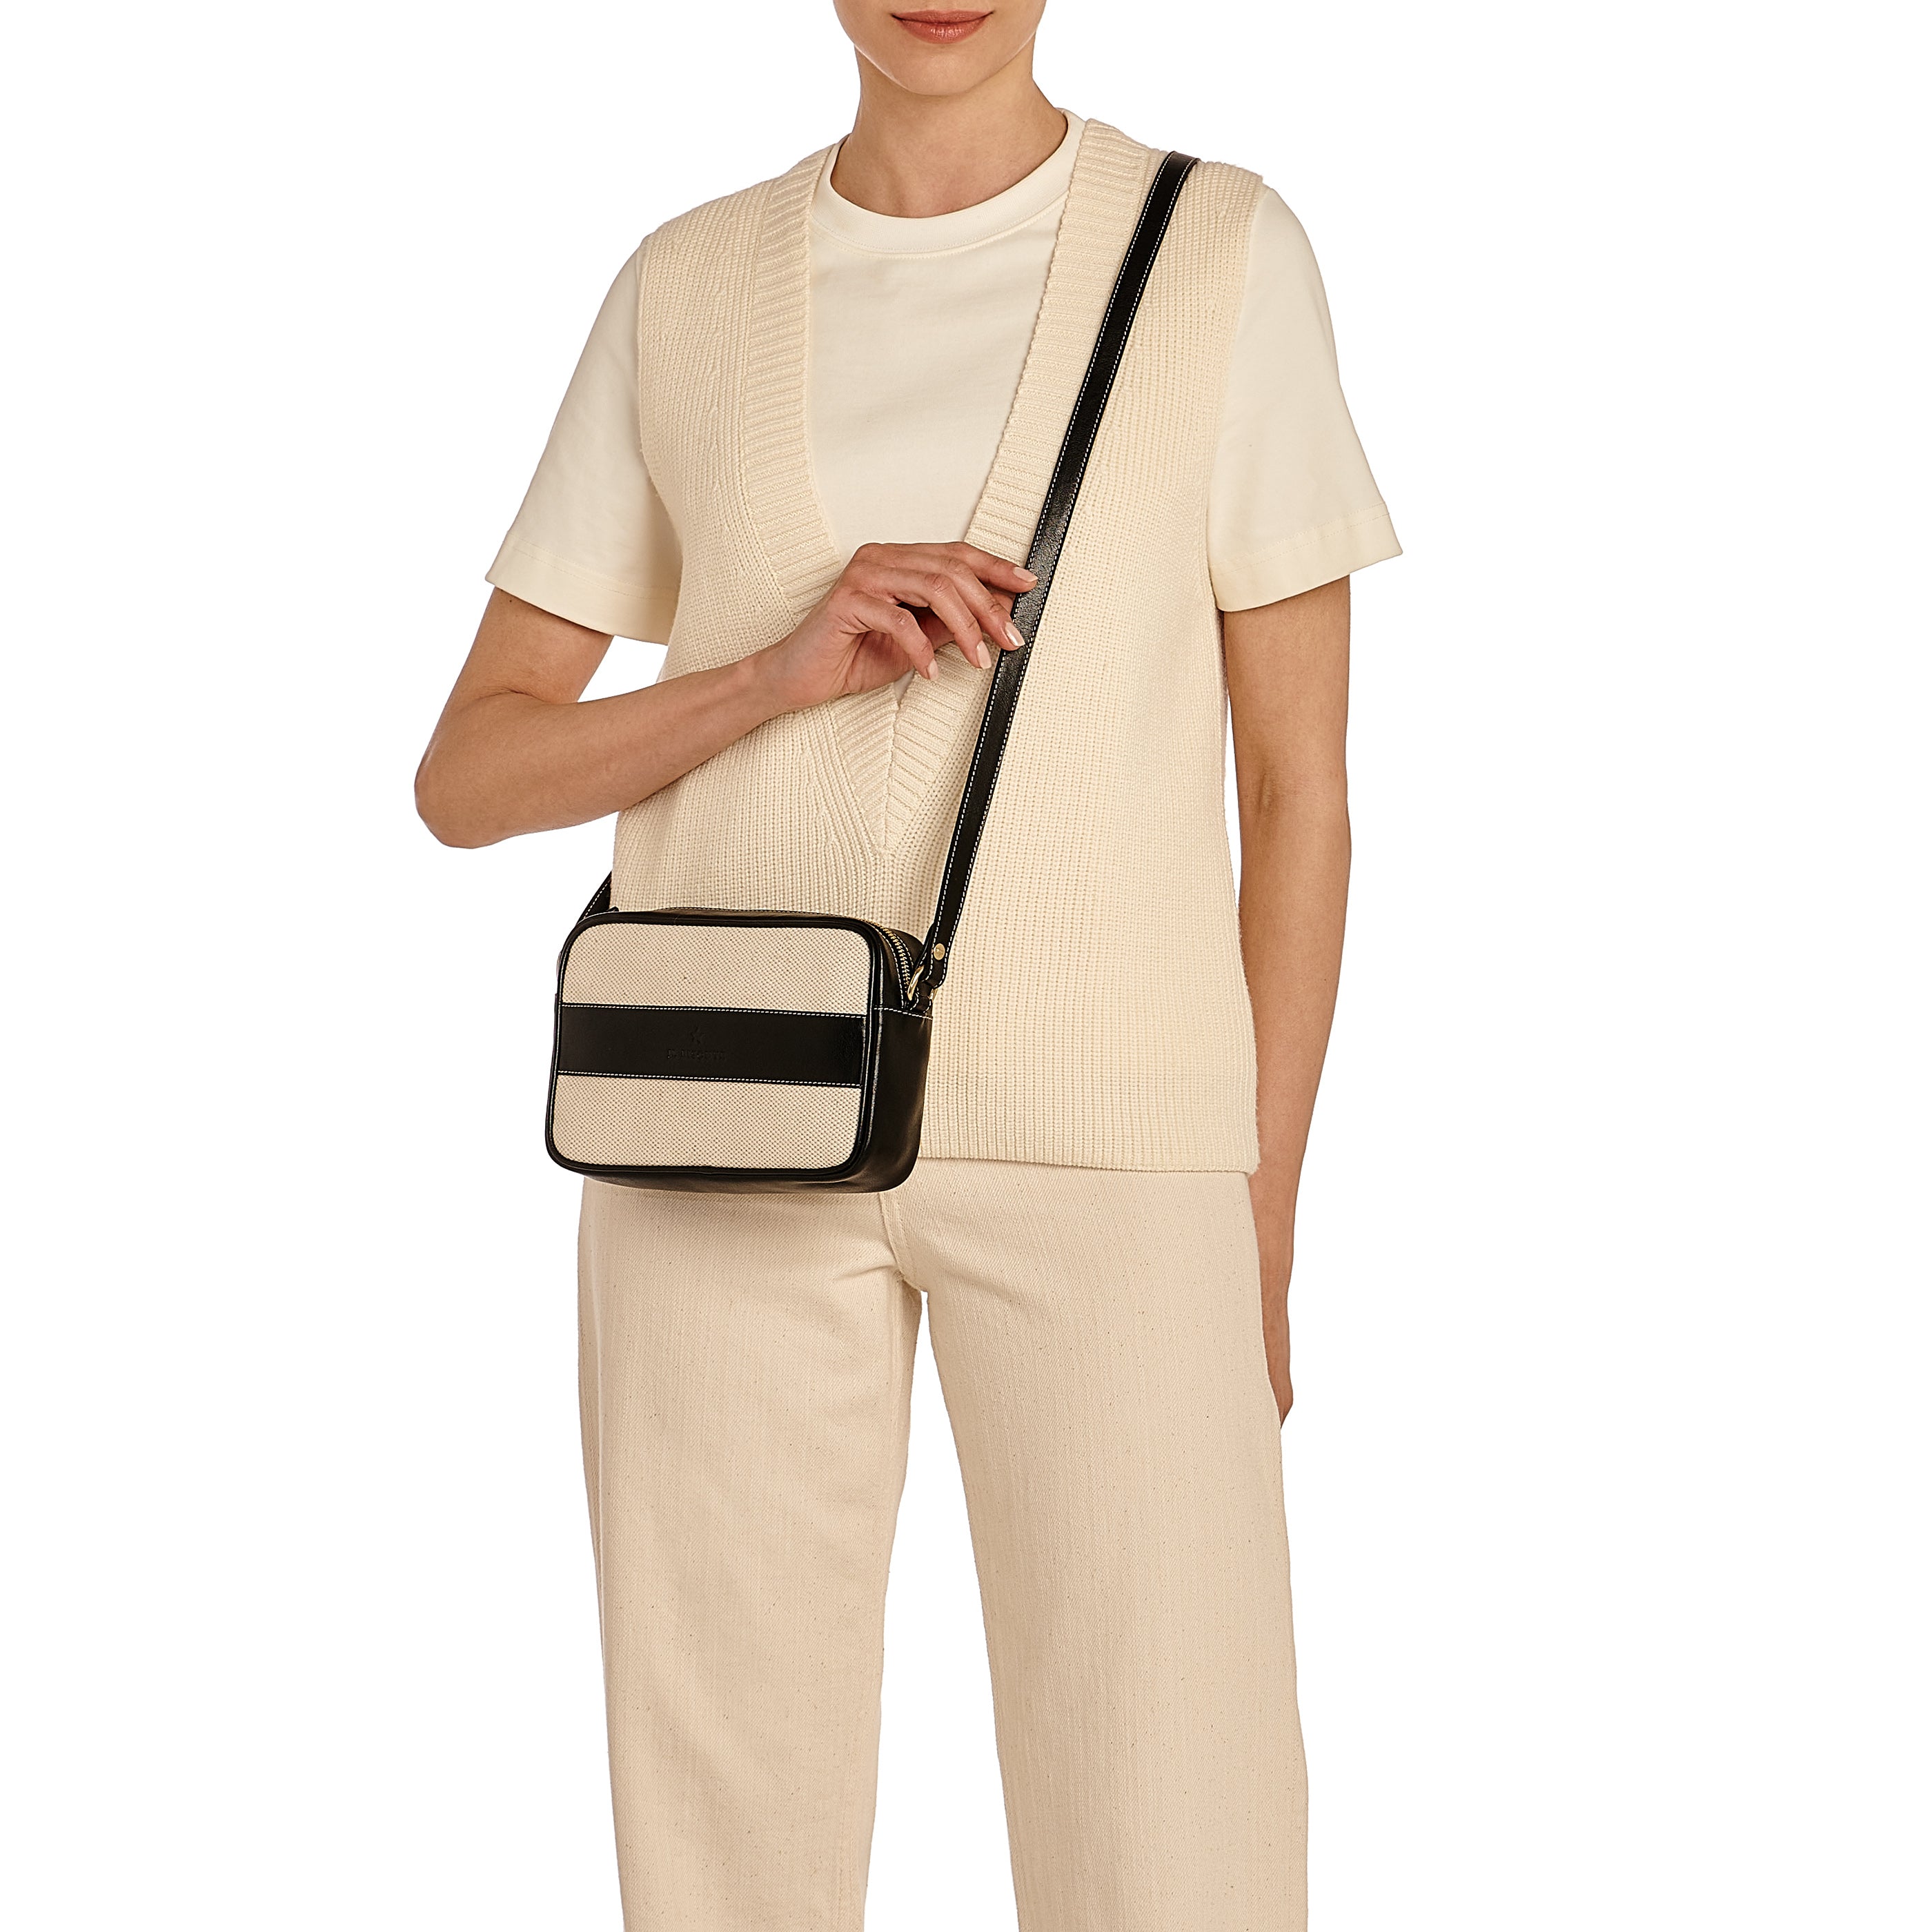 Marini | Women's crossbody bag in fabric color natural / black